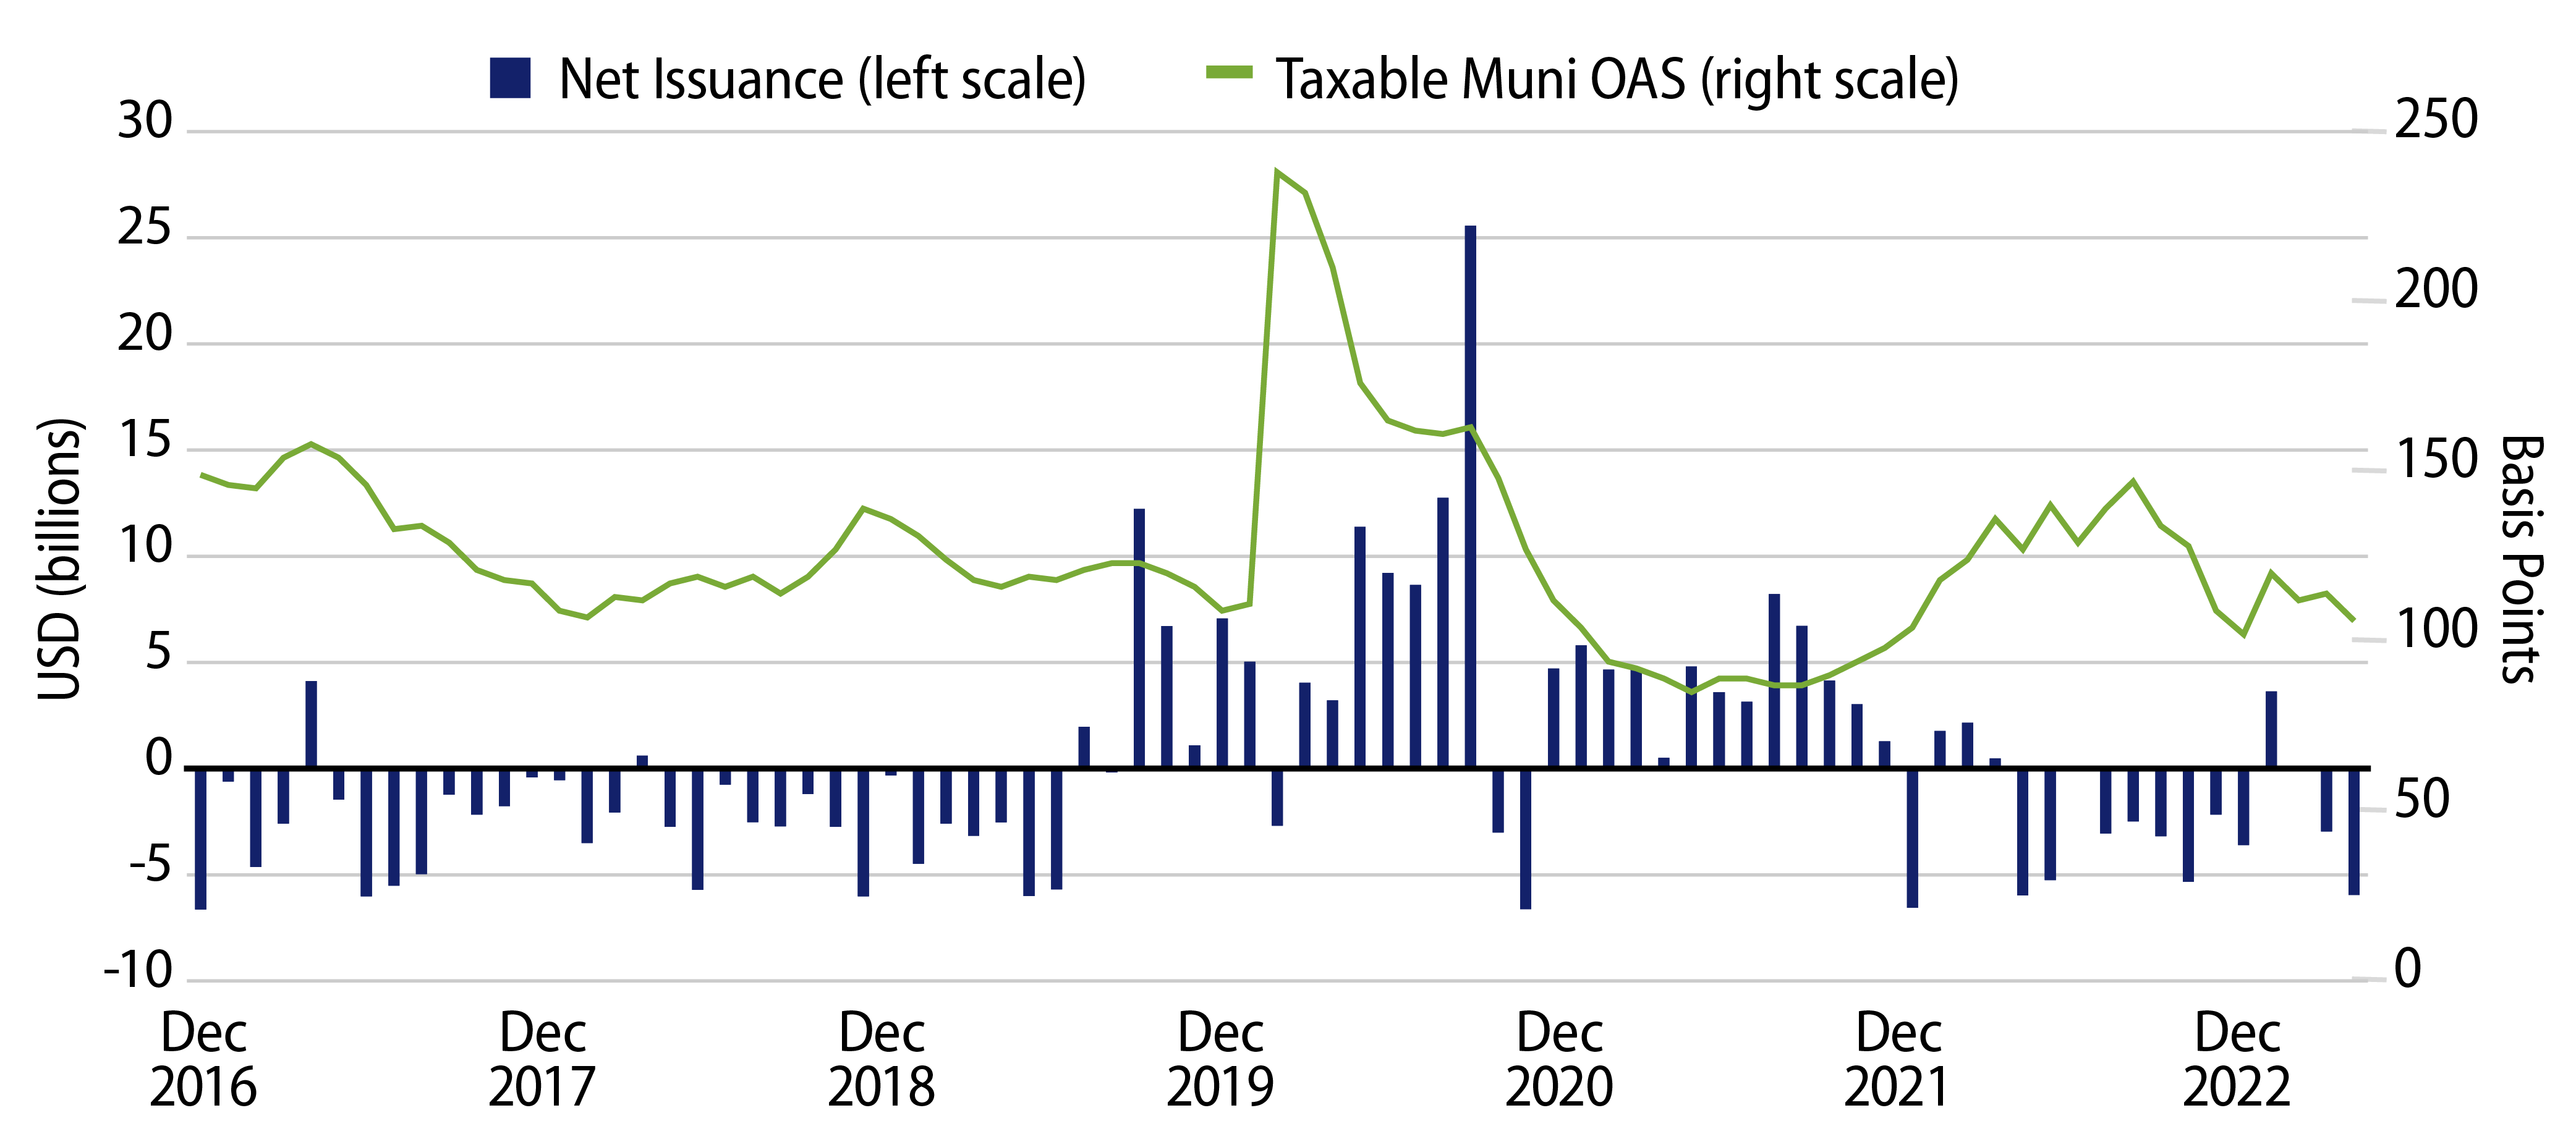 Explore Net Taxable Issuance vs. Taxable Muni OAS